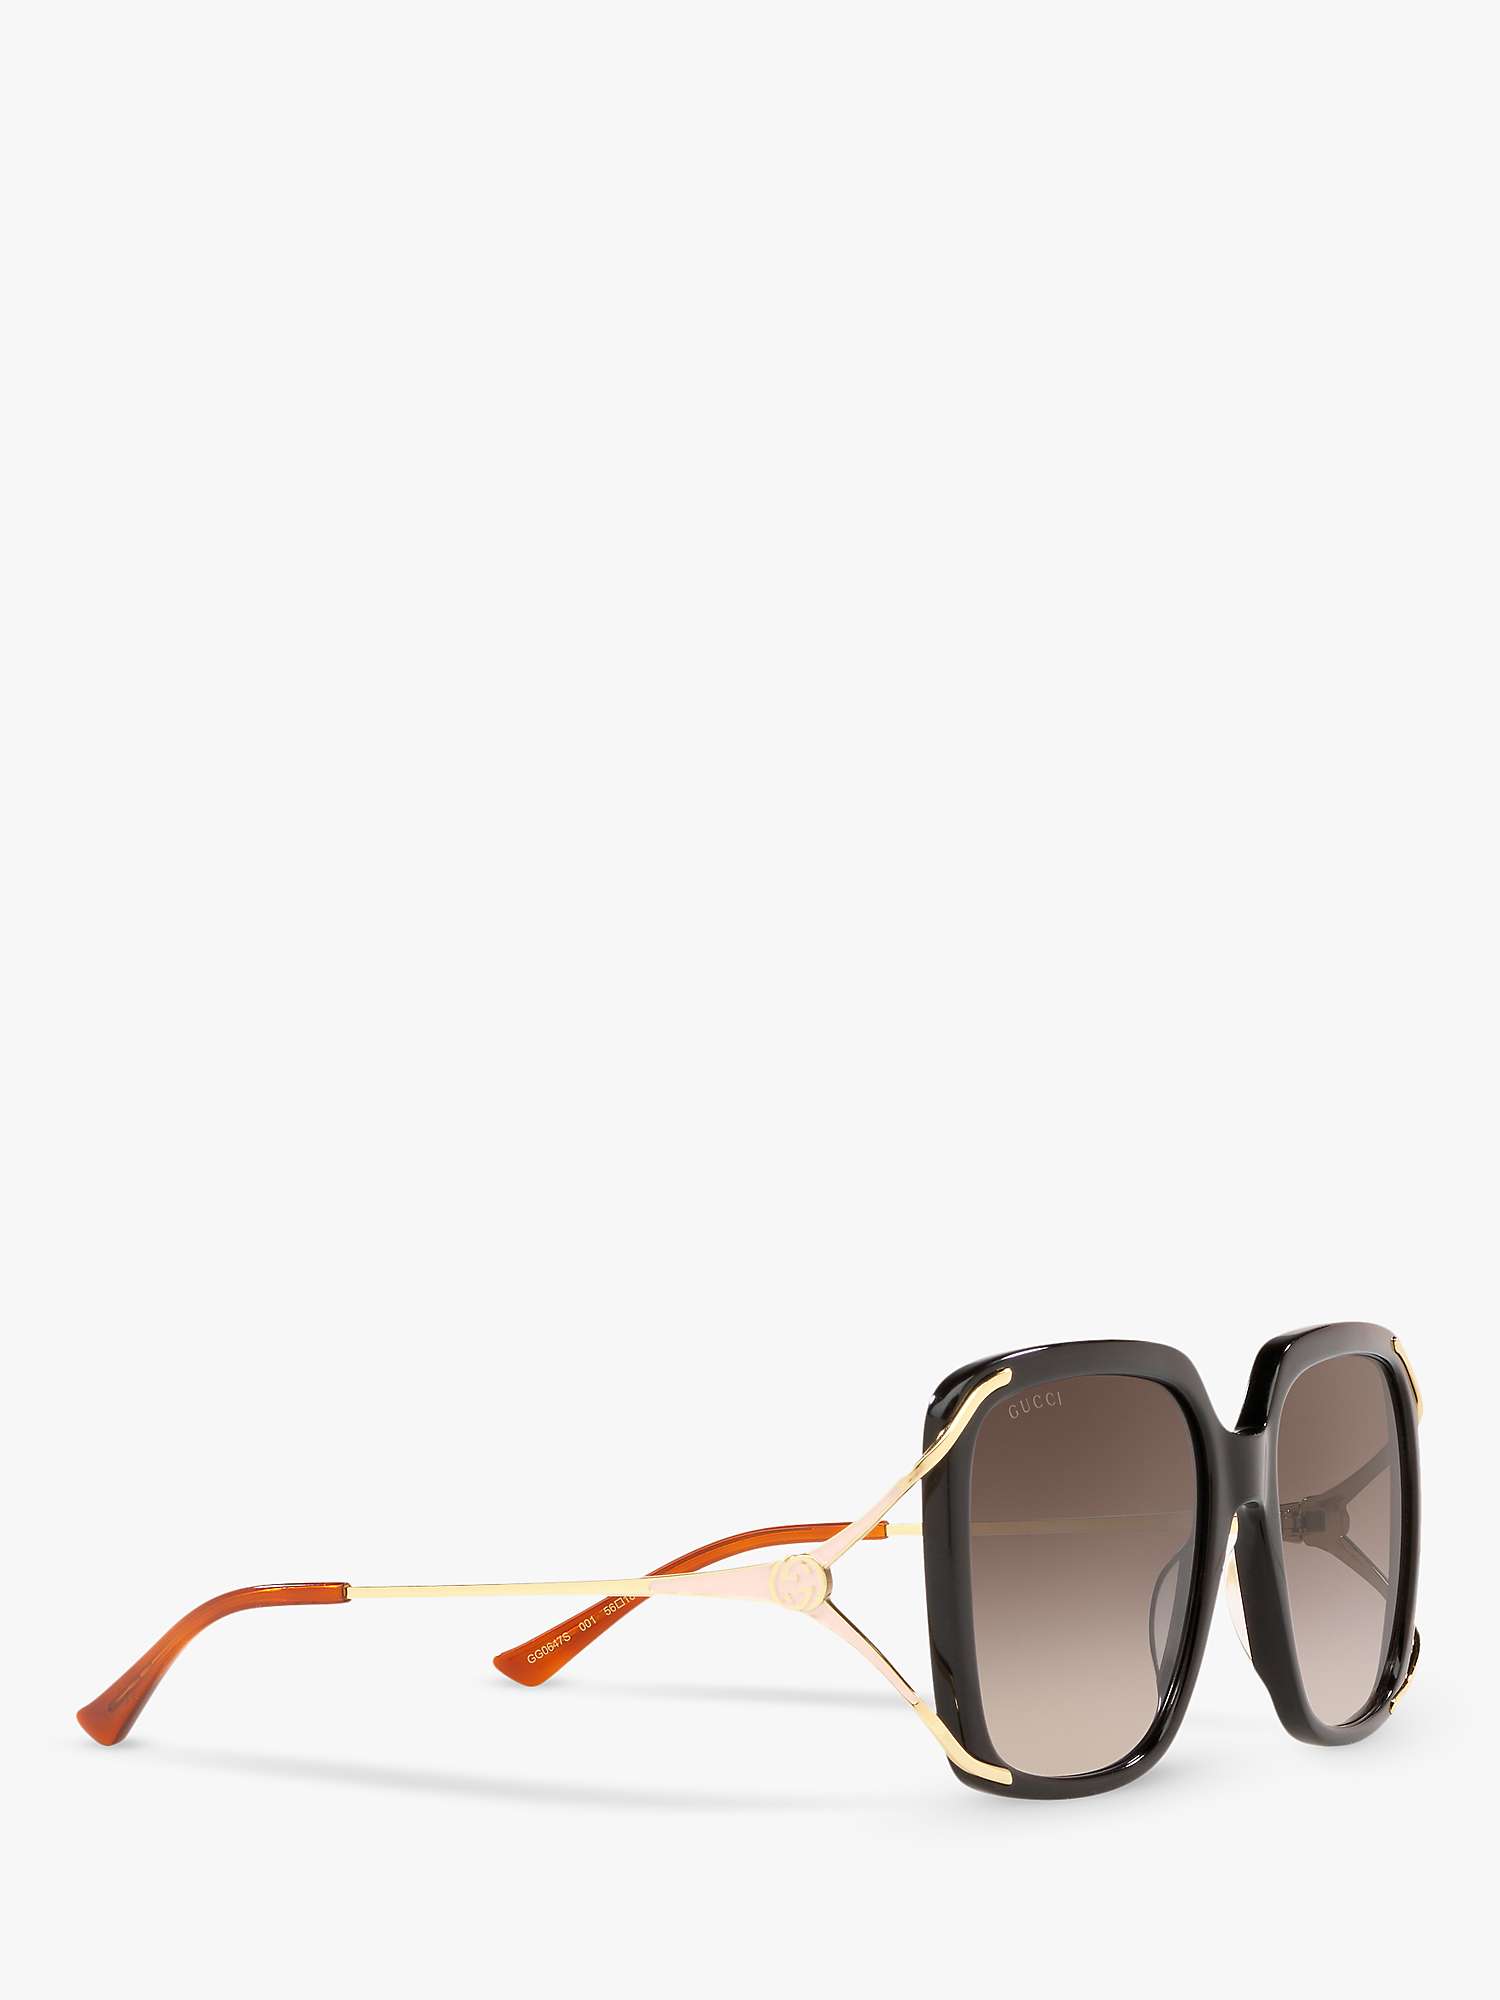 Buy Gucci GG0647S Women's Statement Square Sunglasses, Black/Brown Gradient Online at johnlewis.com